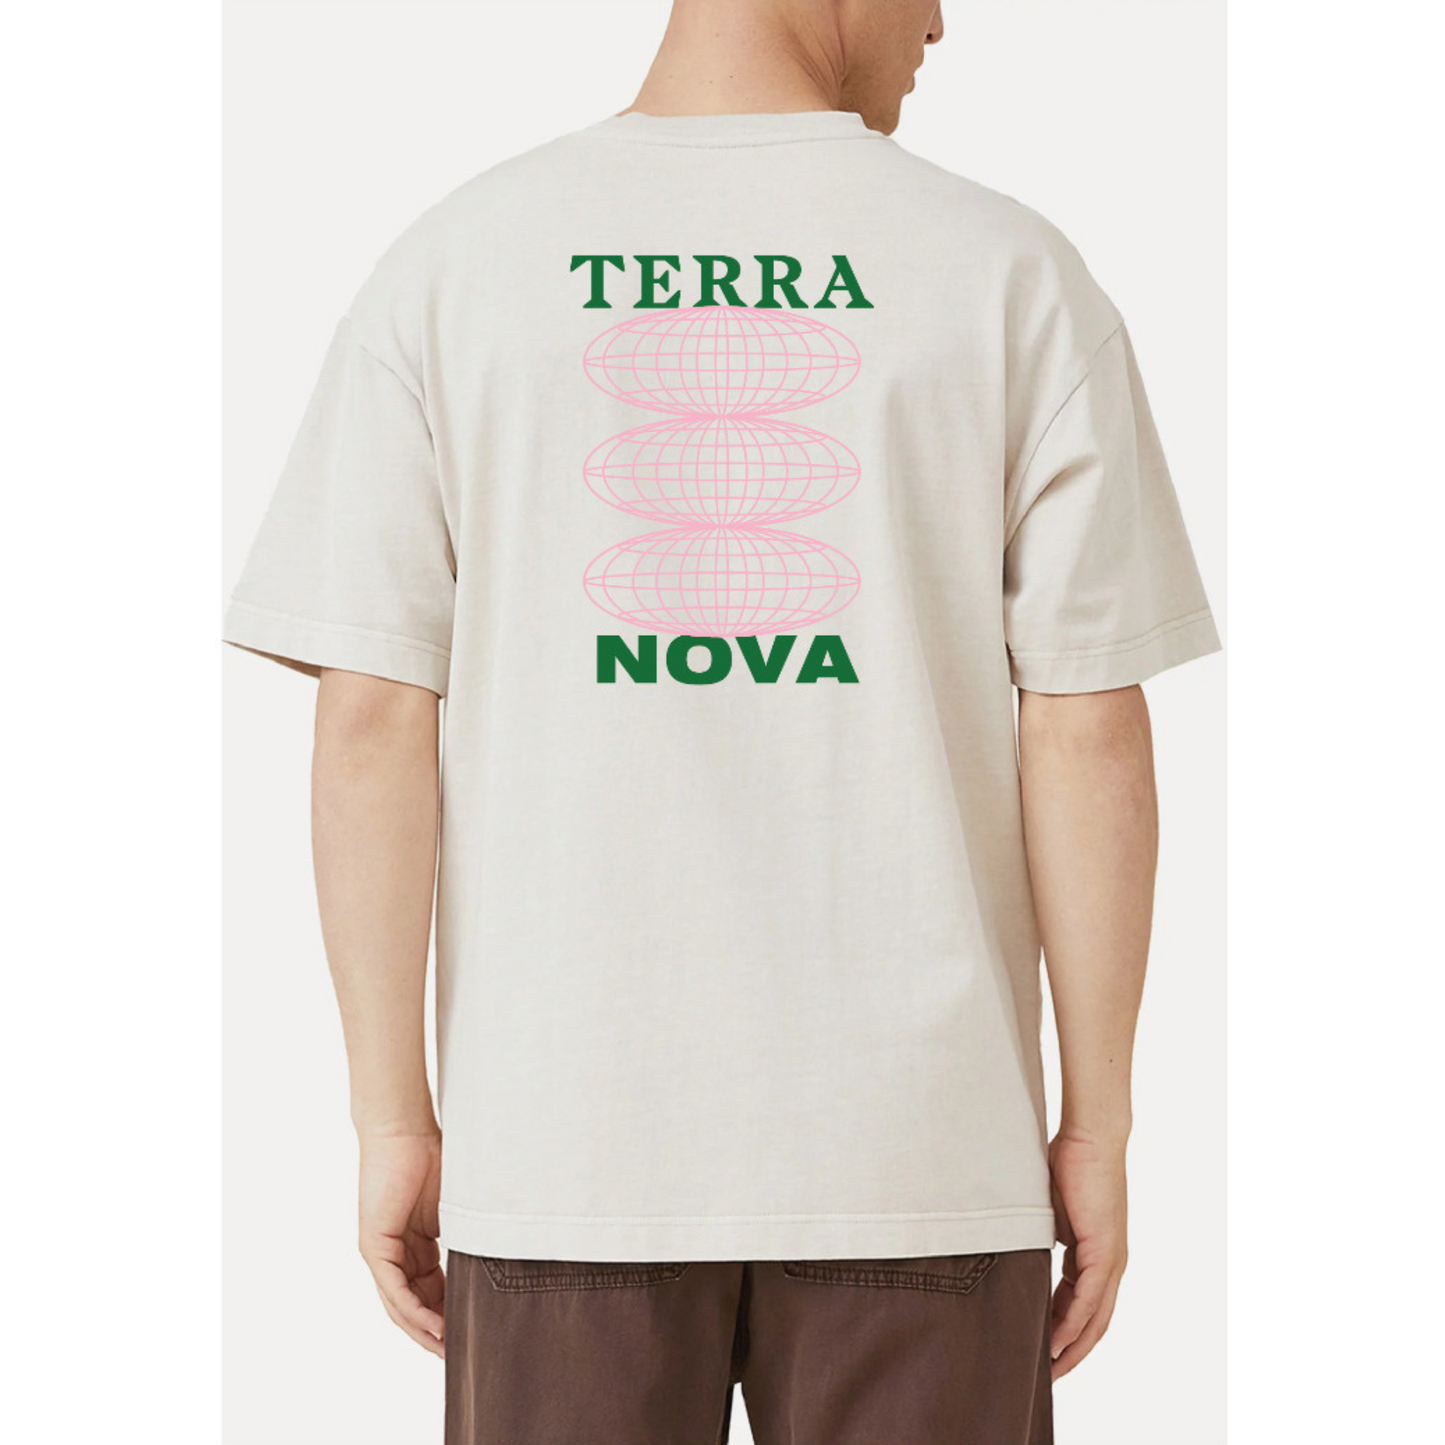 Terra Nova - 5 Year Anniversary Tee